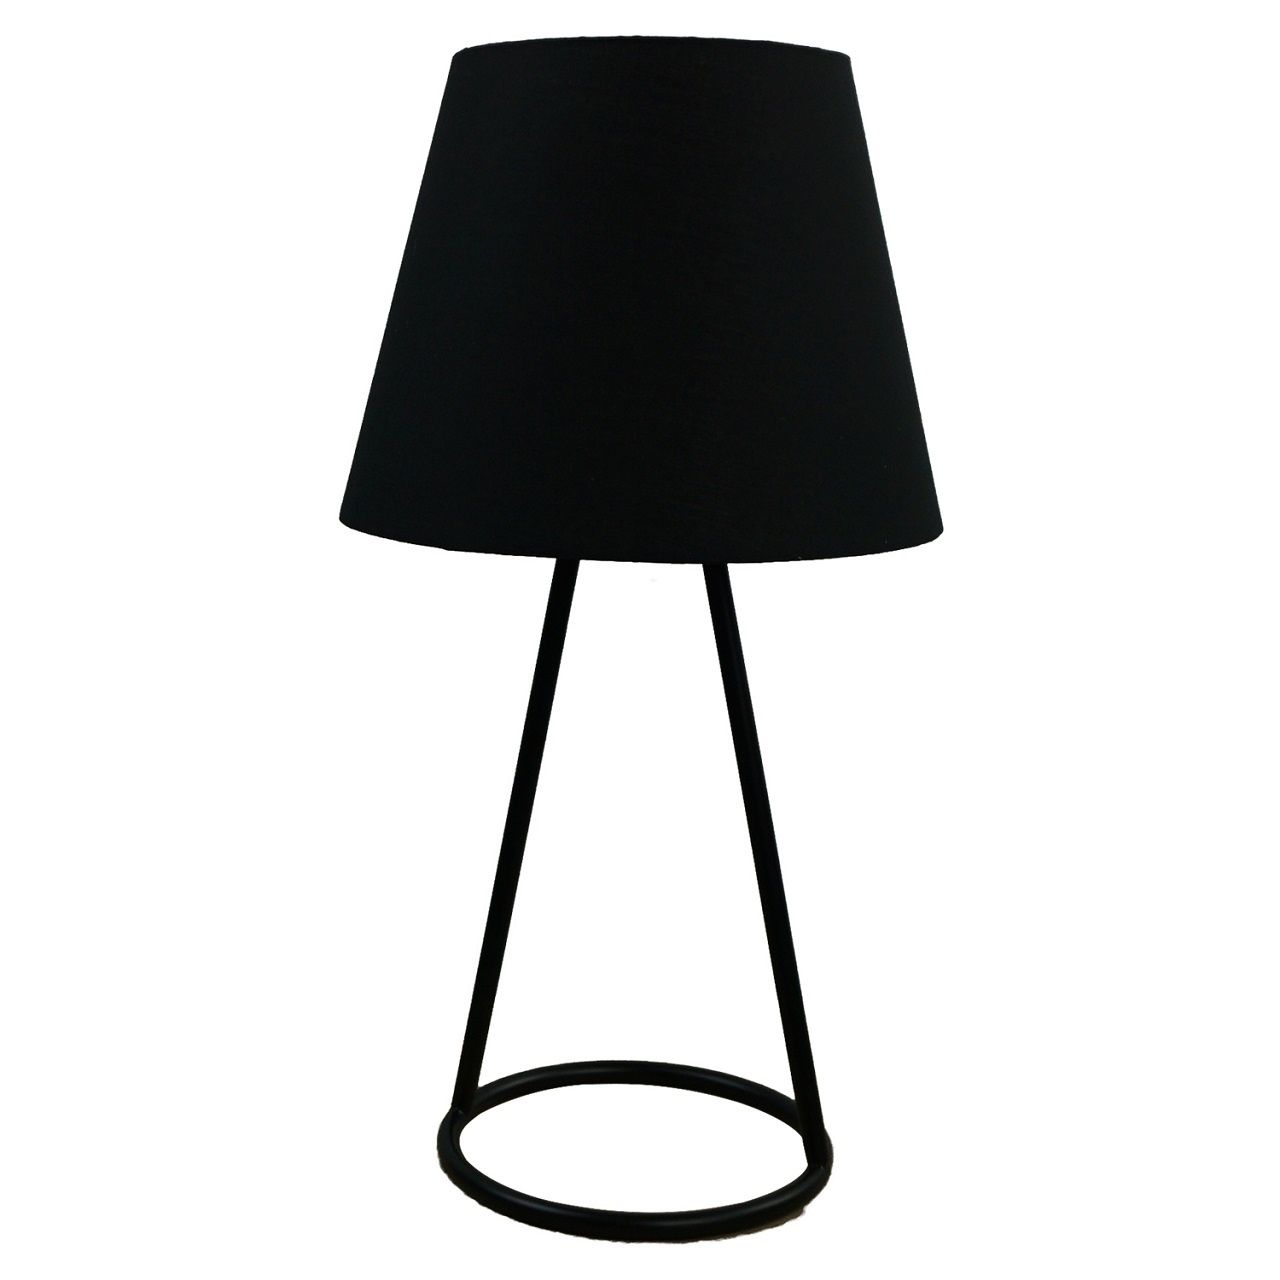 Настольная лампа Lussole Lgo LSP-9904, Е27, диаметр 28 см, цвет чёрный.